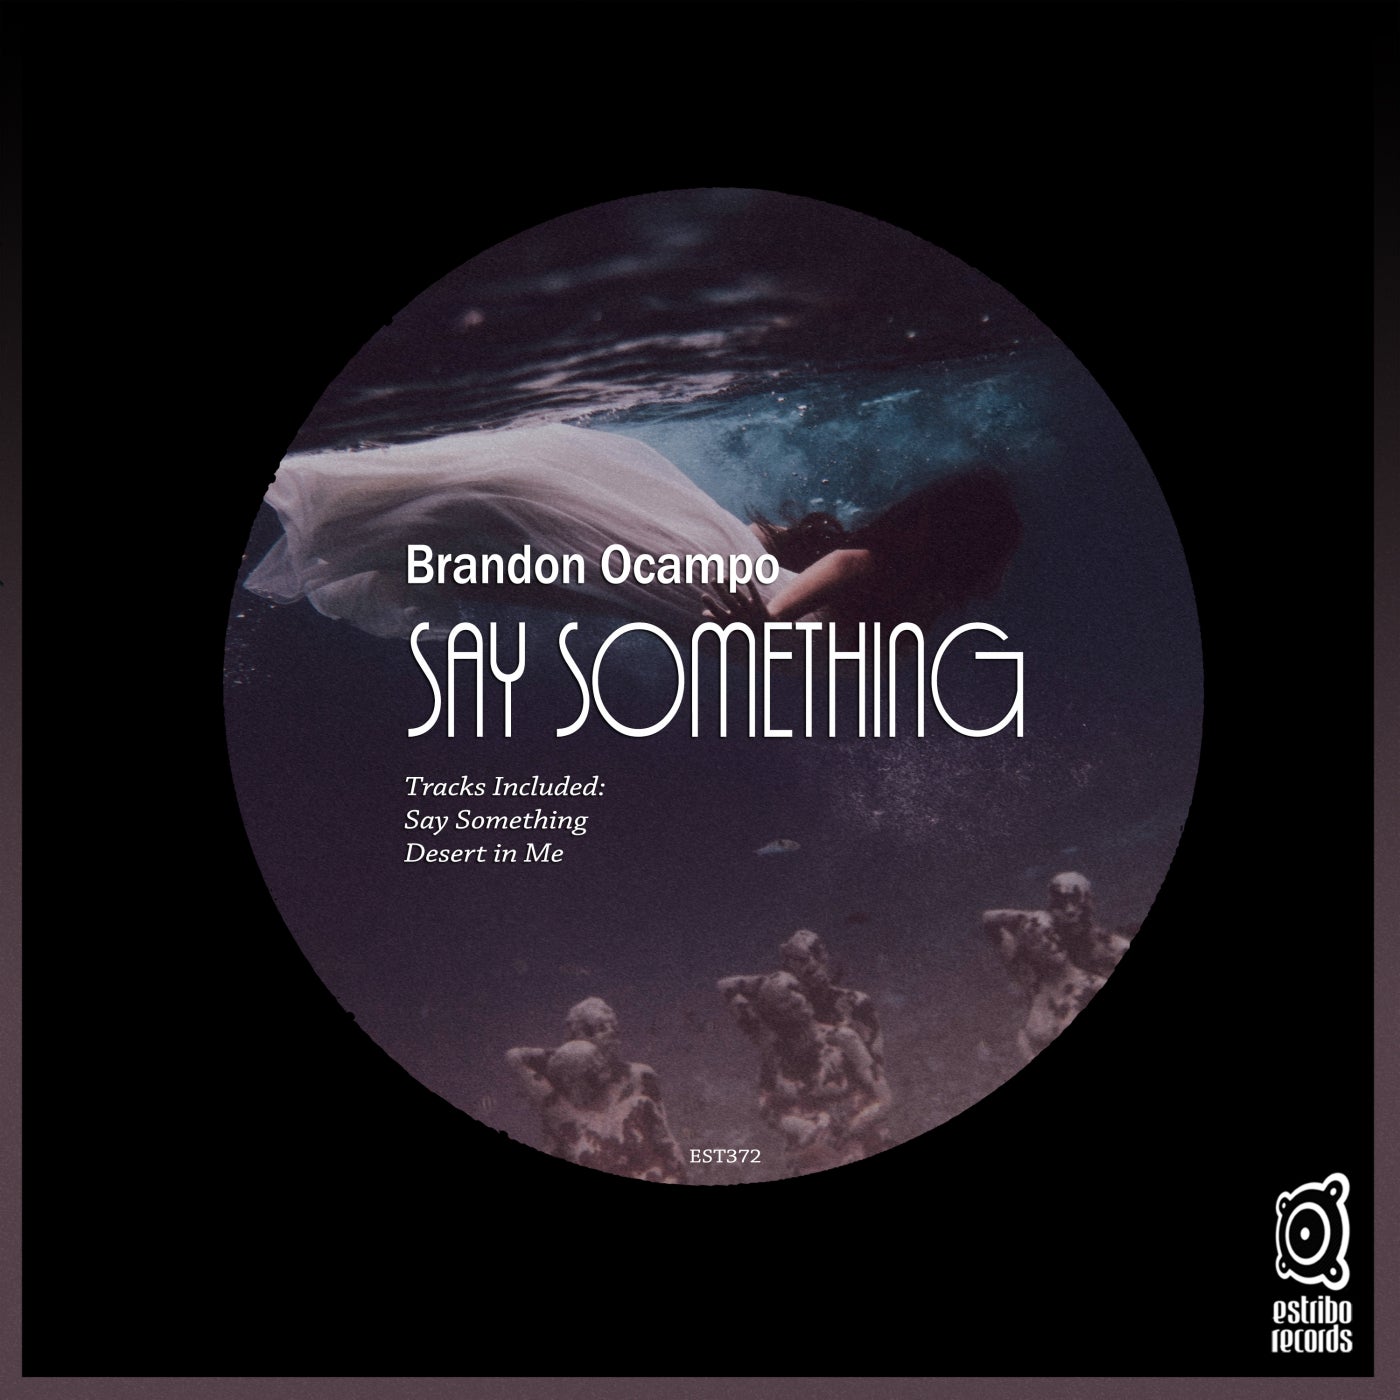 Brandon Ocampo - Say Something [EST372]